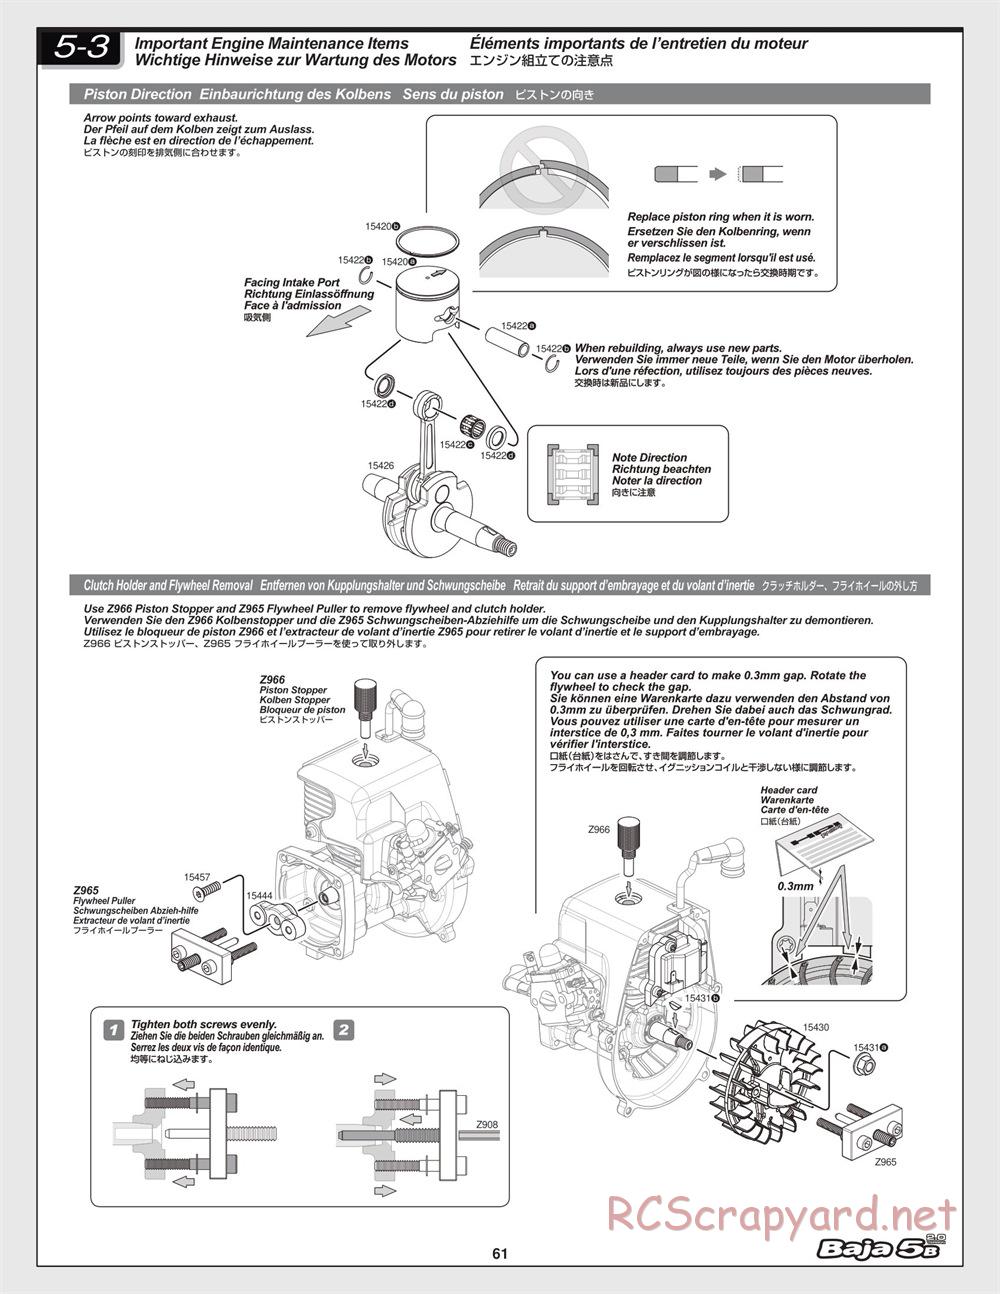 HPI - Baja 5B 2.0 - Manual - Page 61